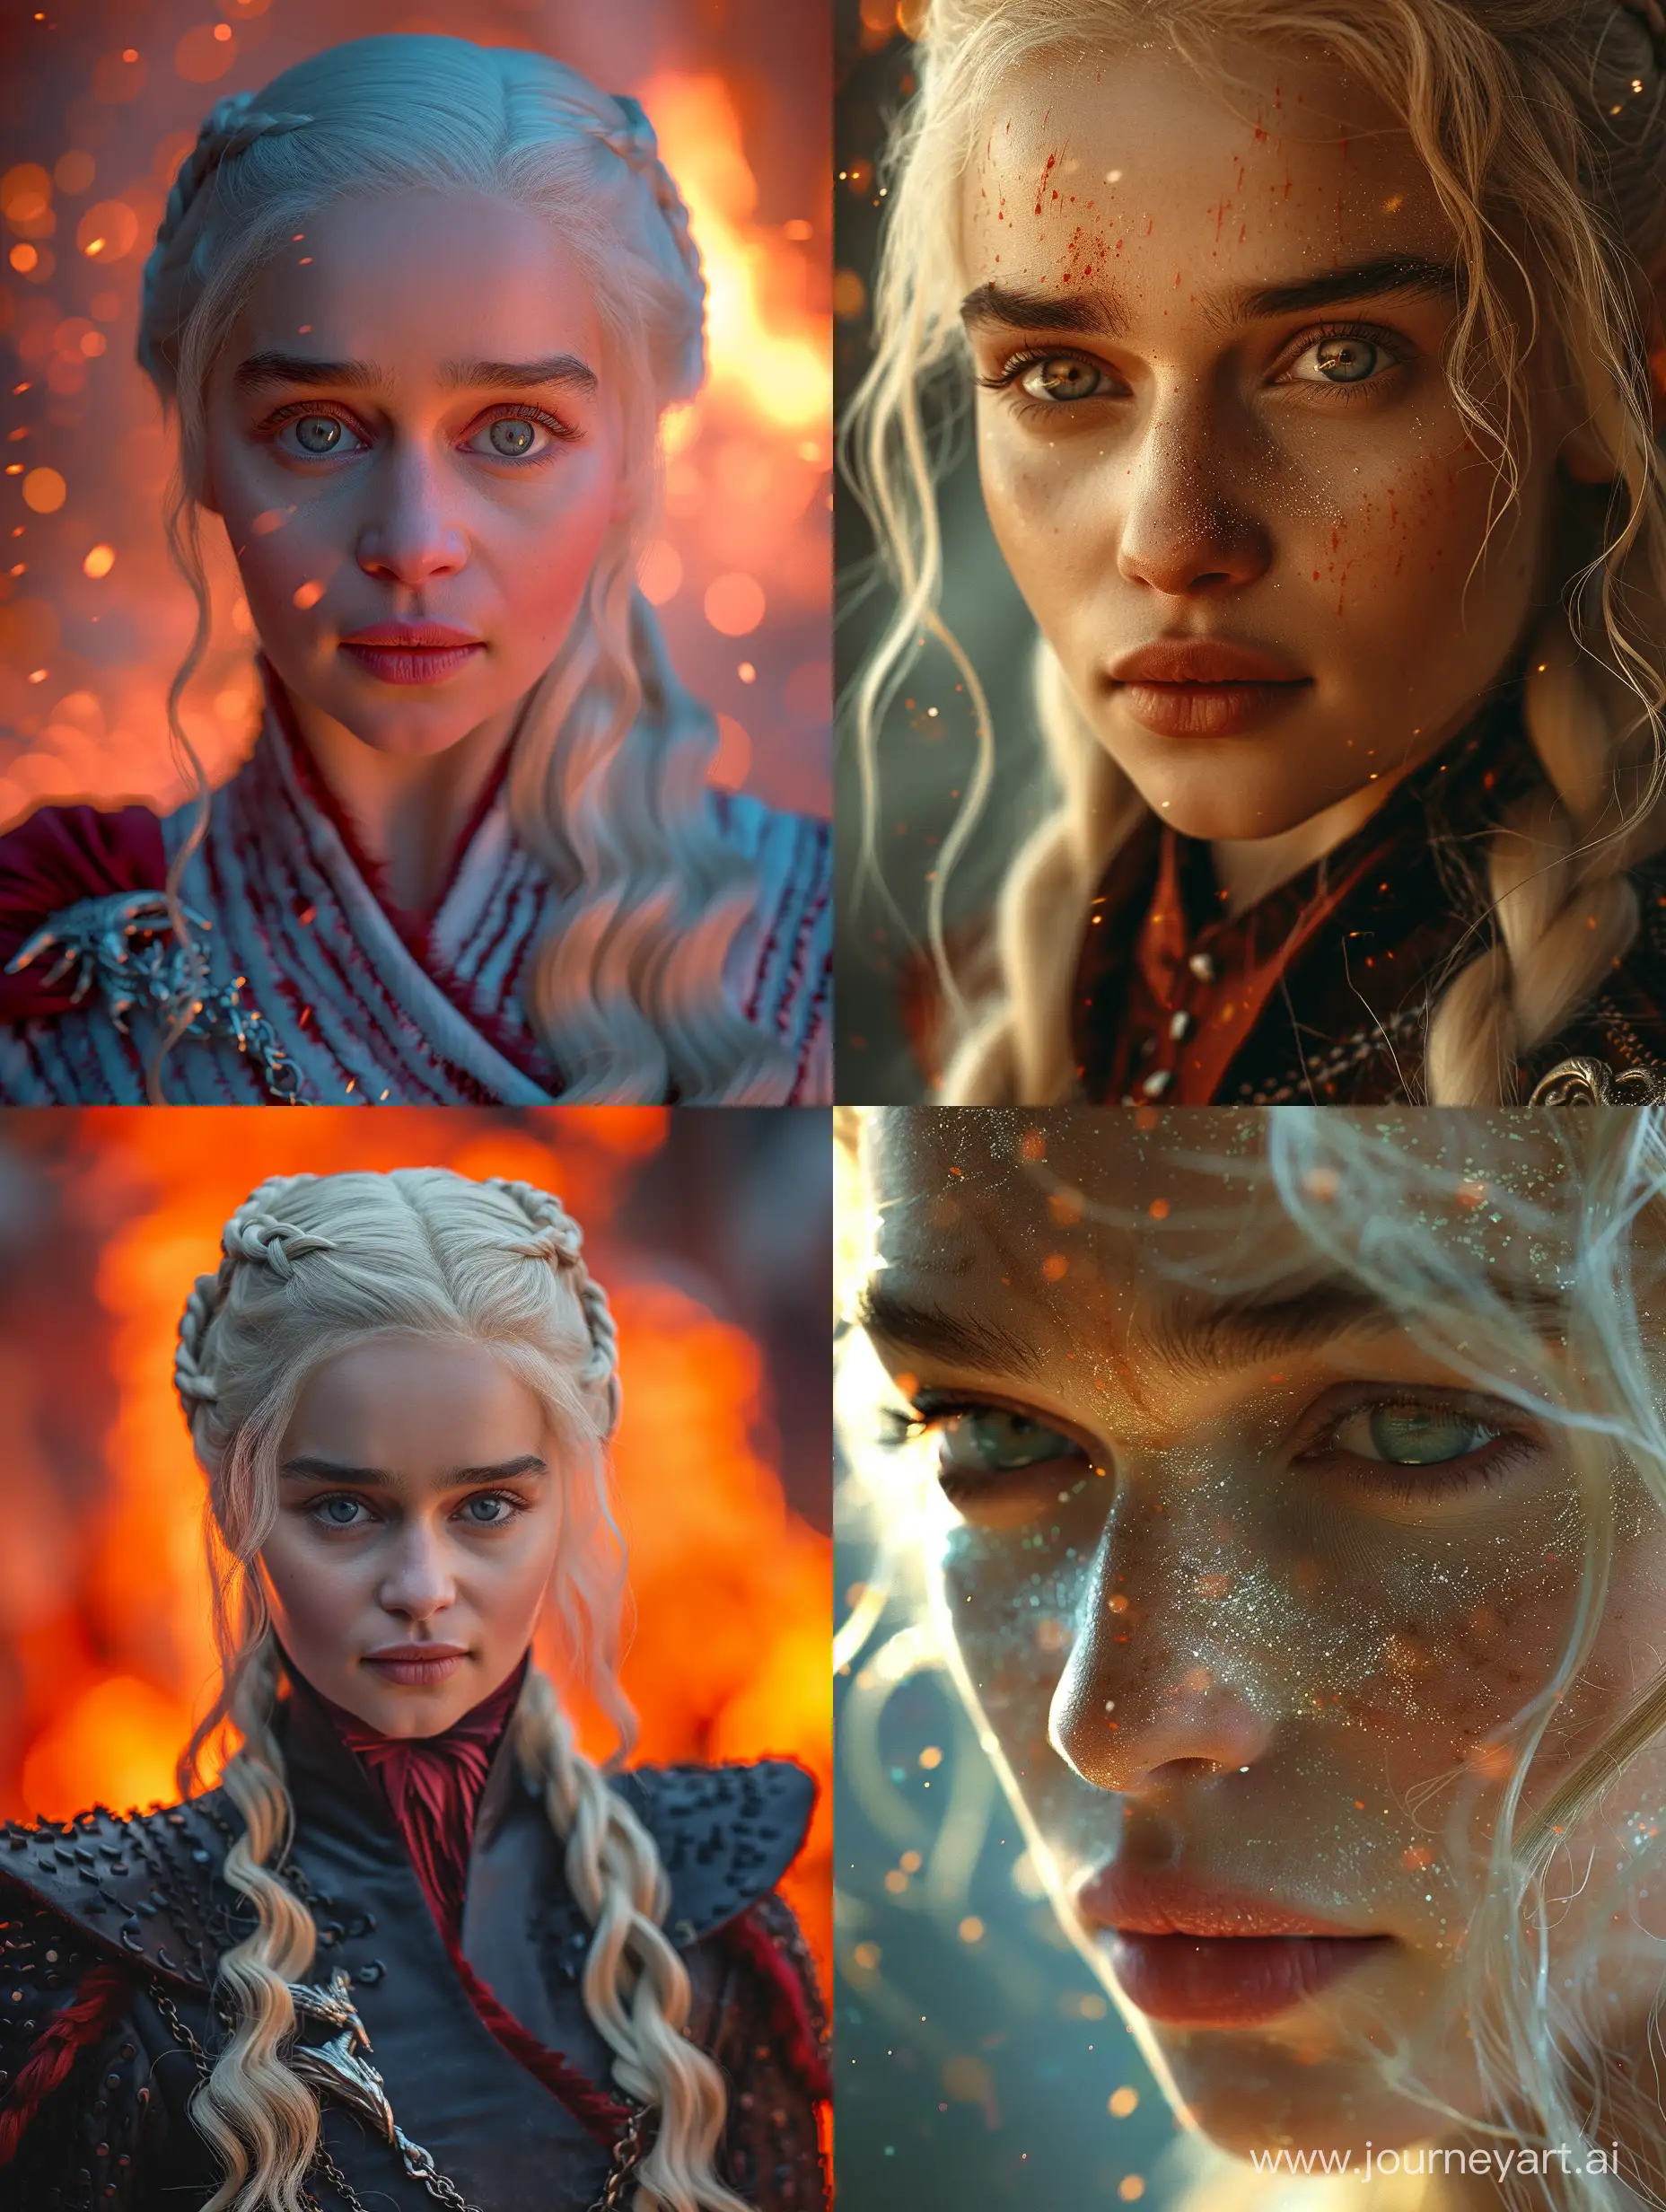 Daenerys-Targaryen-CloseUp-Dramatic-Fashion-Portrait-in-Game-of-Thrones-Style